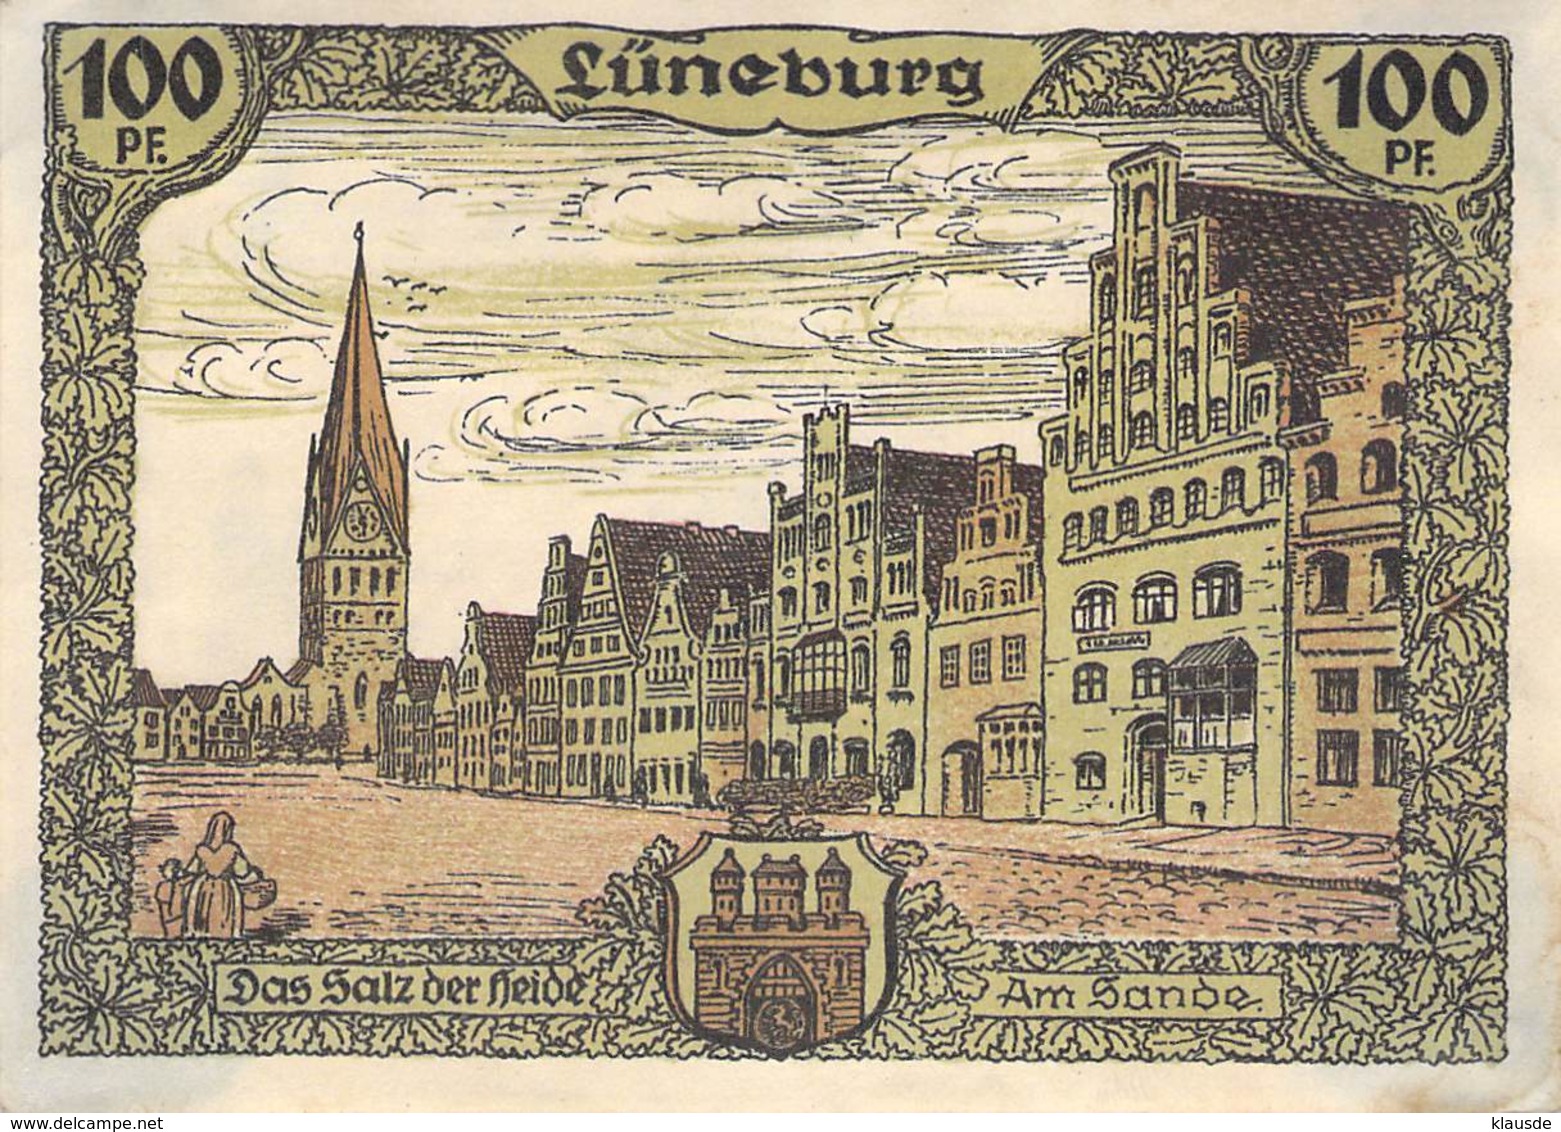 100 Pfg. Notgeld Lüneburg VF/F (III) - [11] Local Banknote Issues